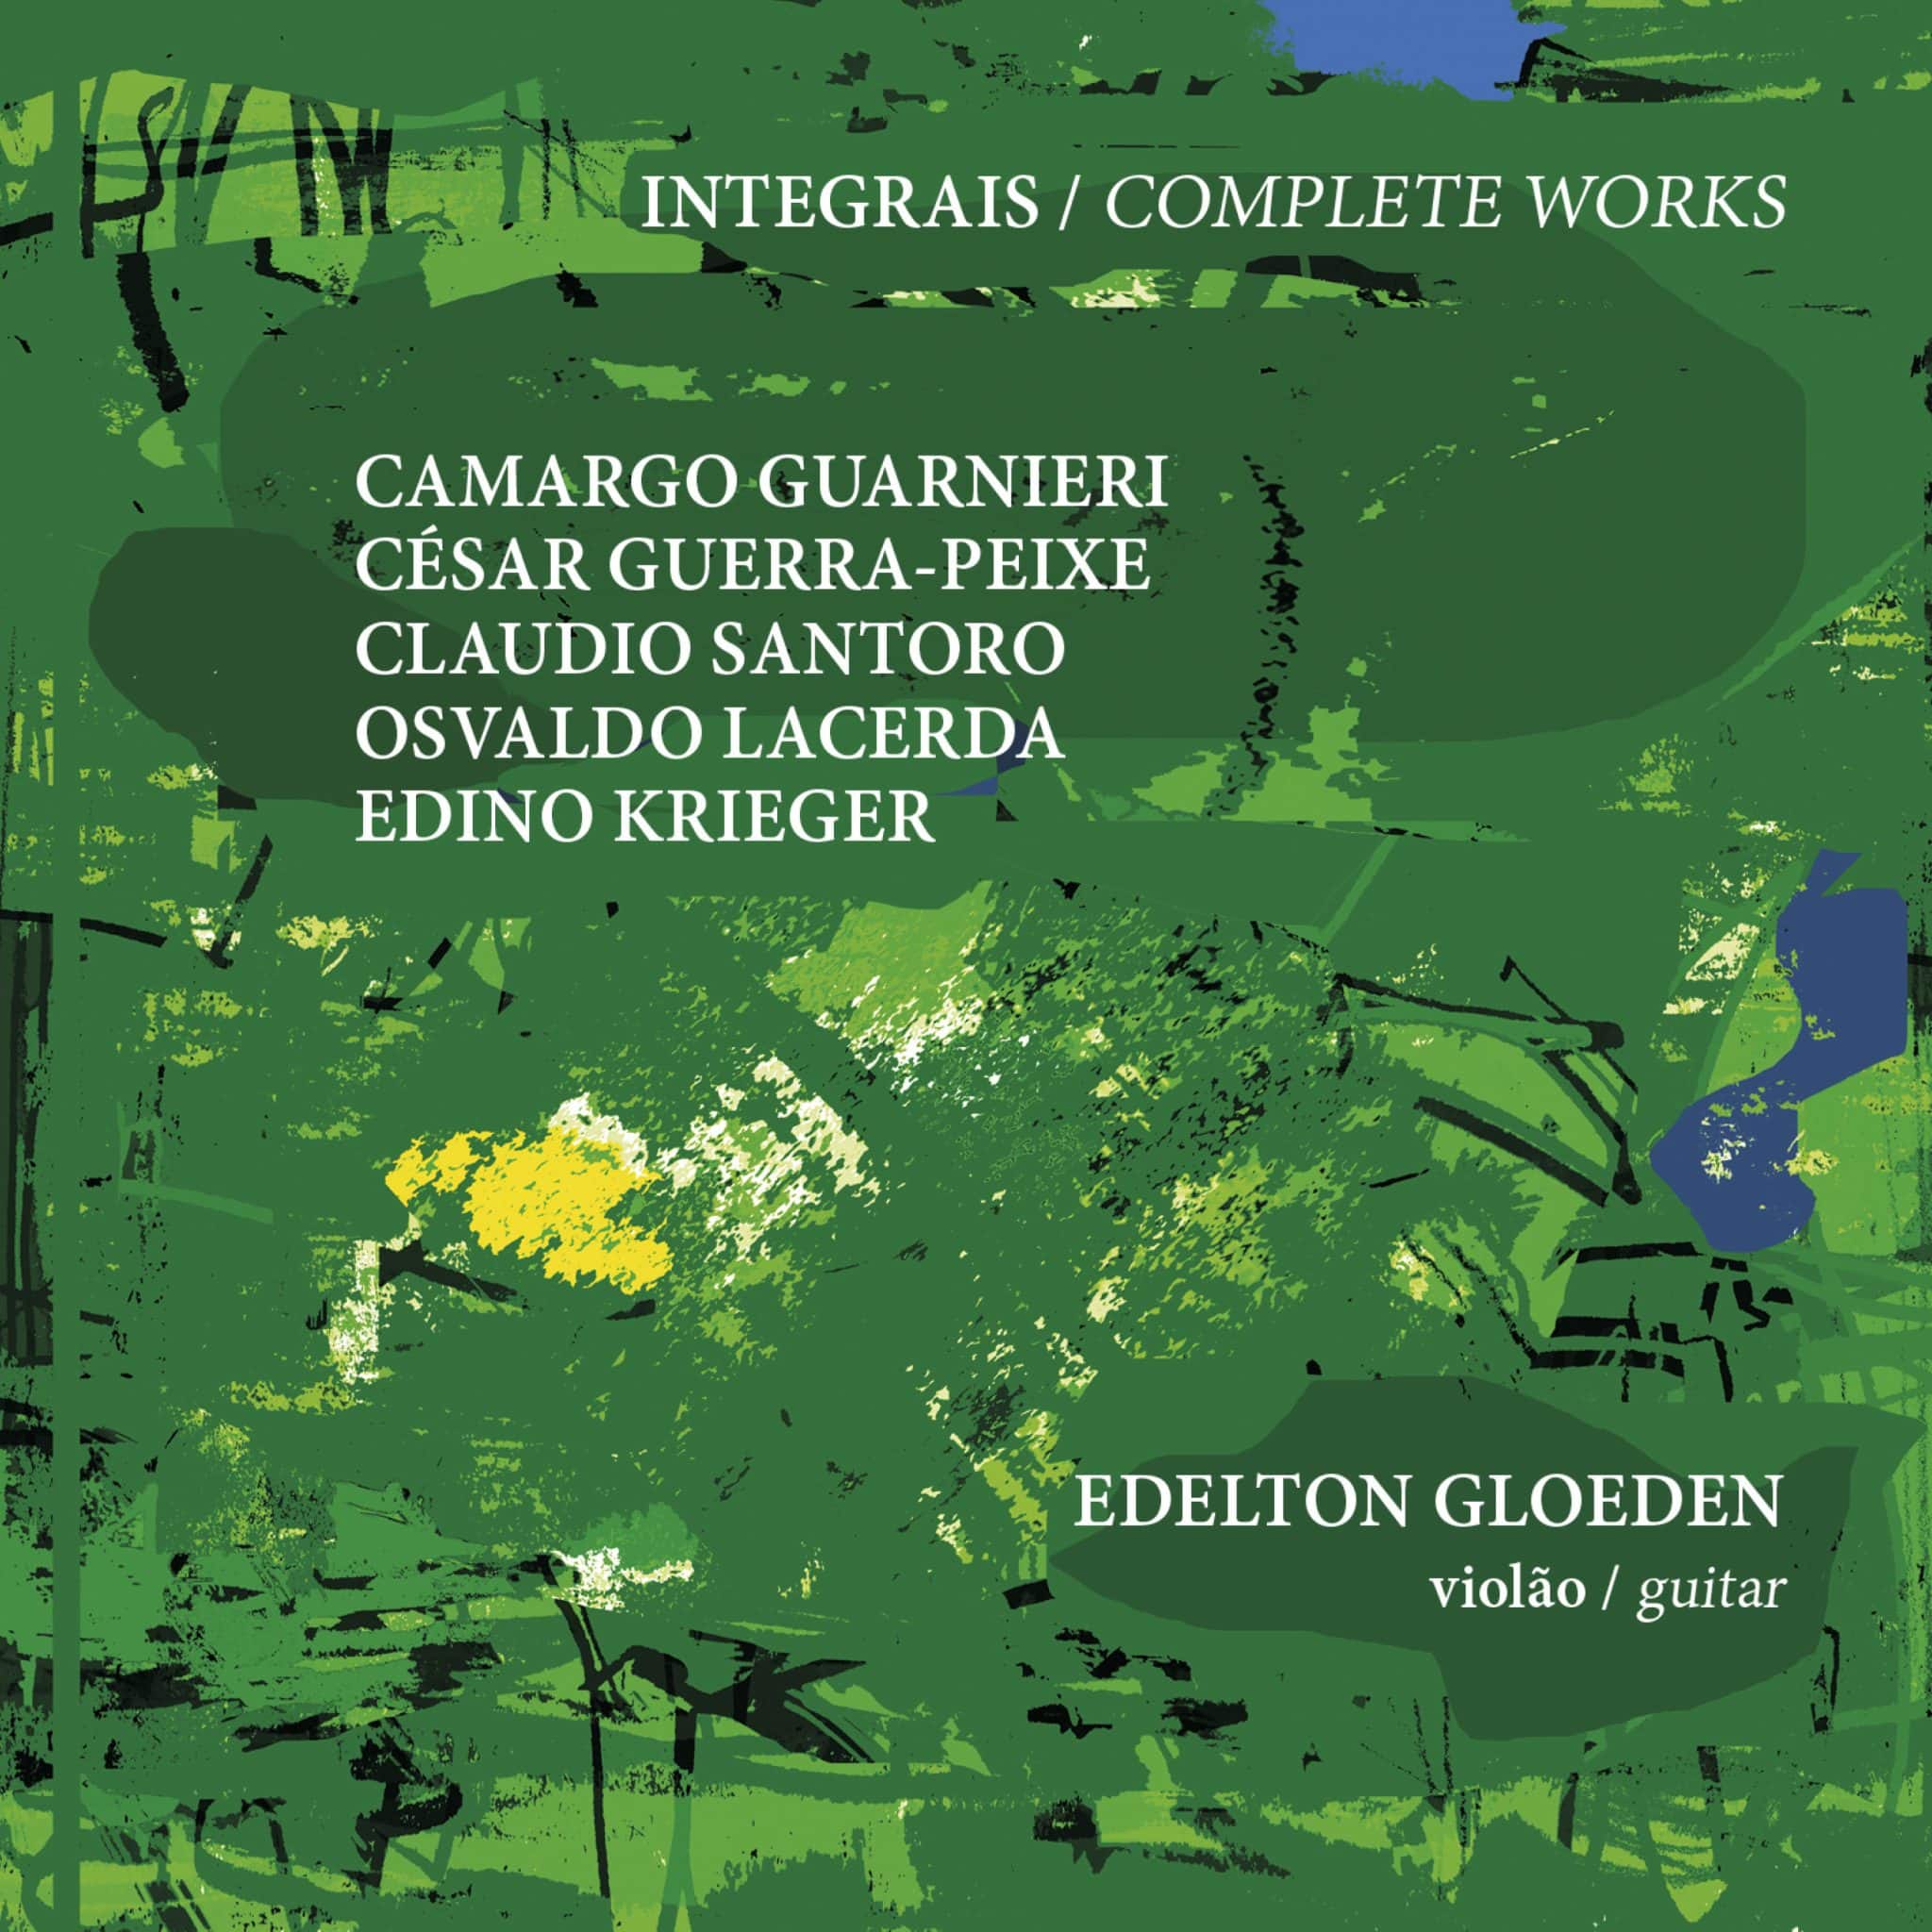 revistaprosaversoearte.com - Violonista Edelton Gloeden lança CD duplo “Integrais” Pelo Selo Sesc